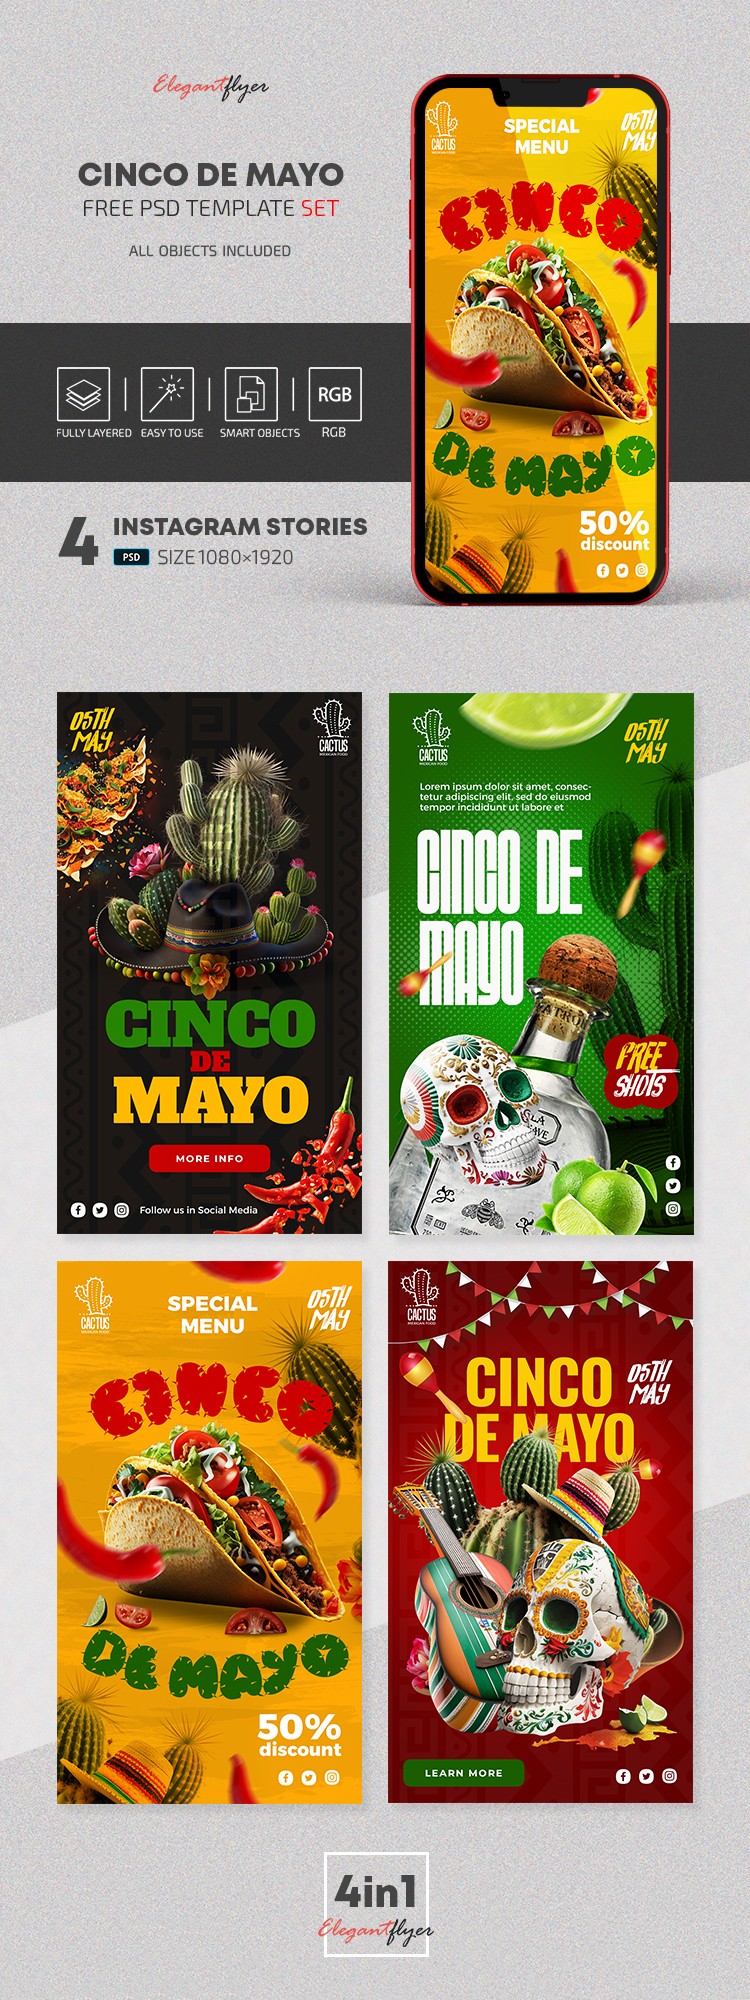 Cinco de Mayo Instagram Stories Set in PSD by ElegantFlyer